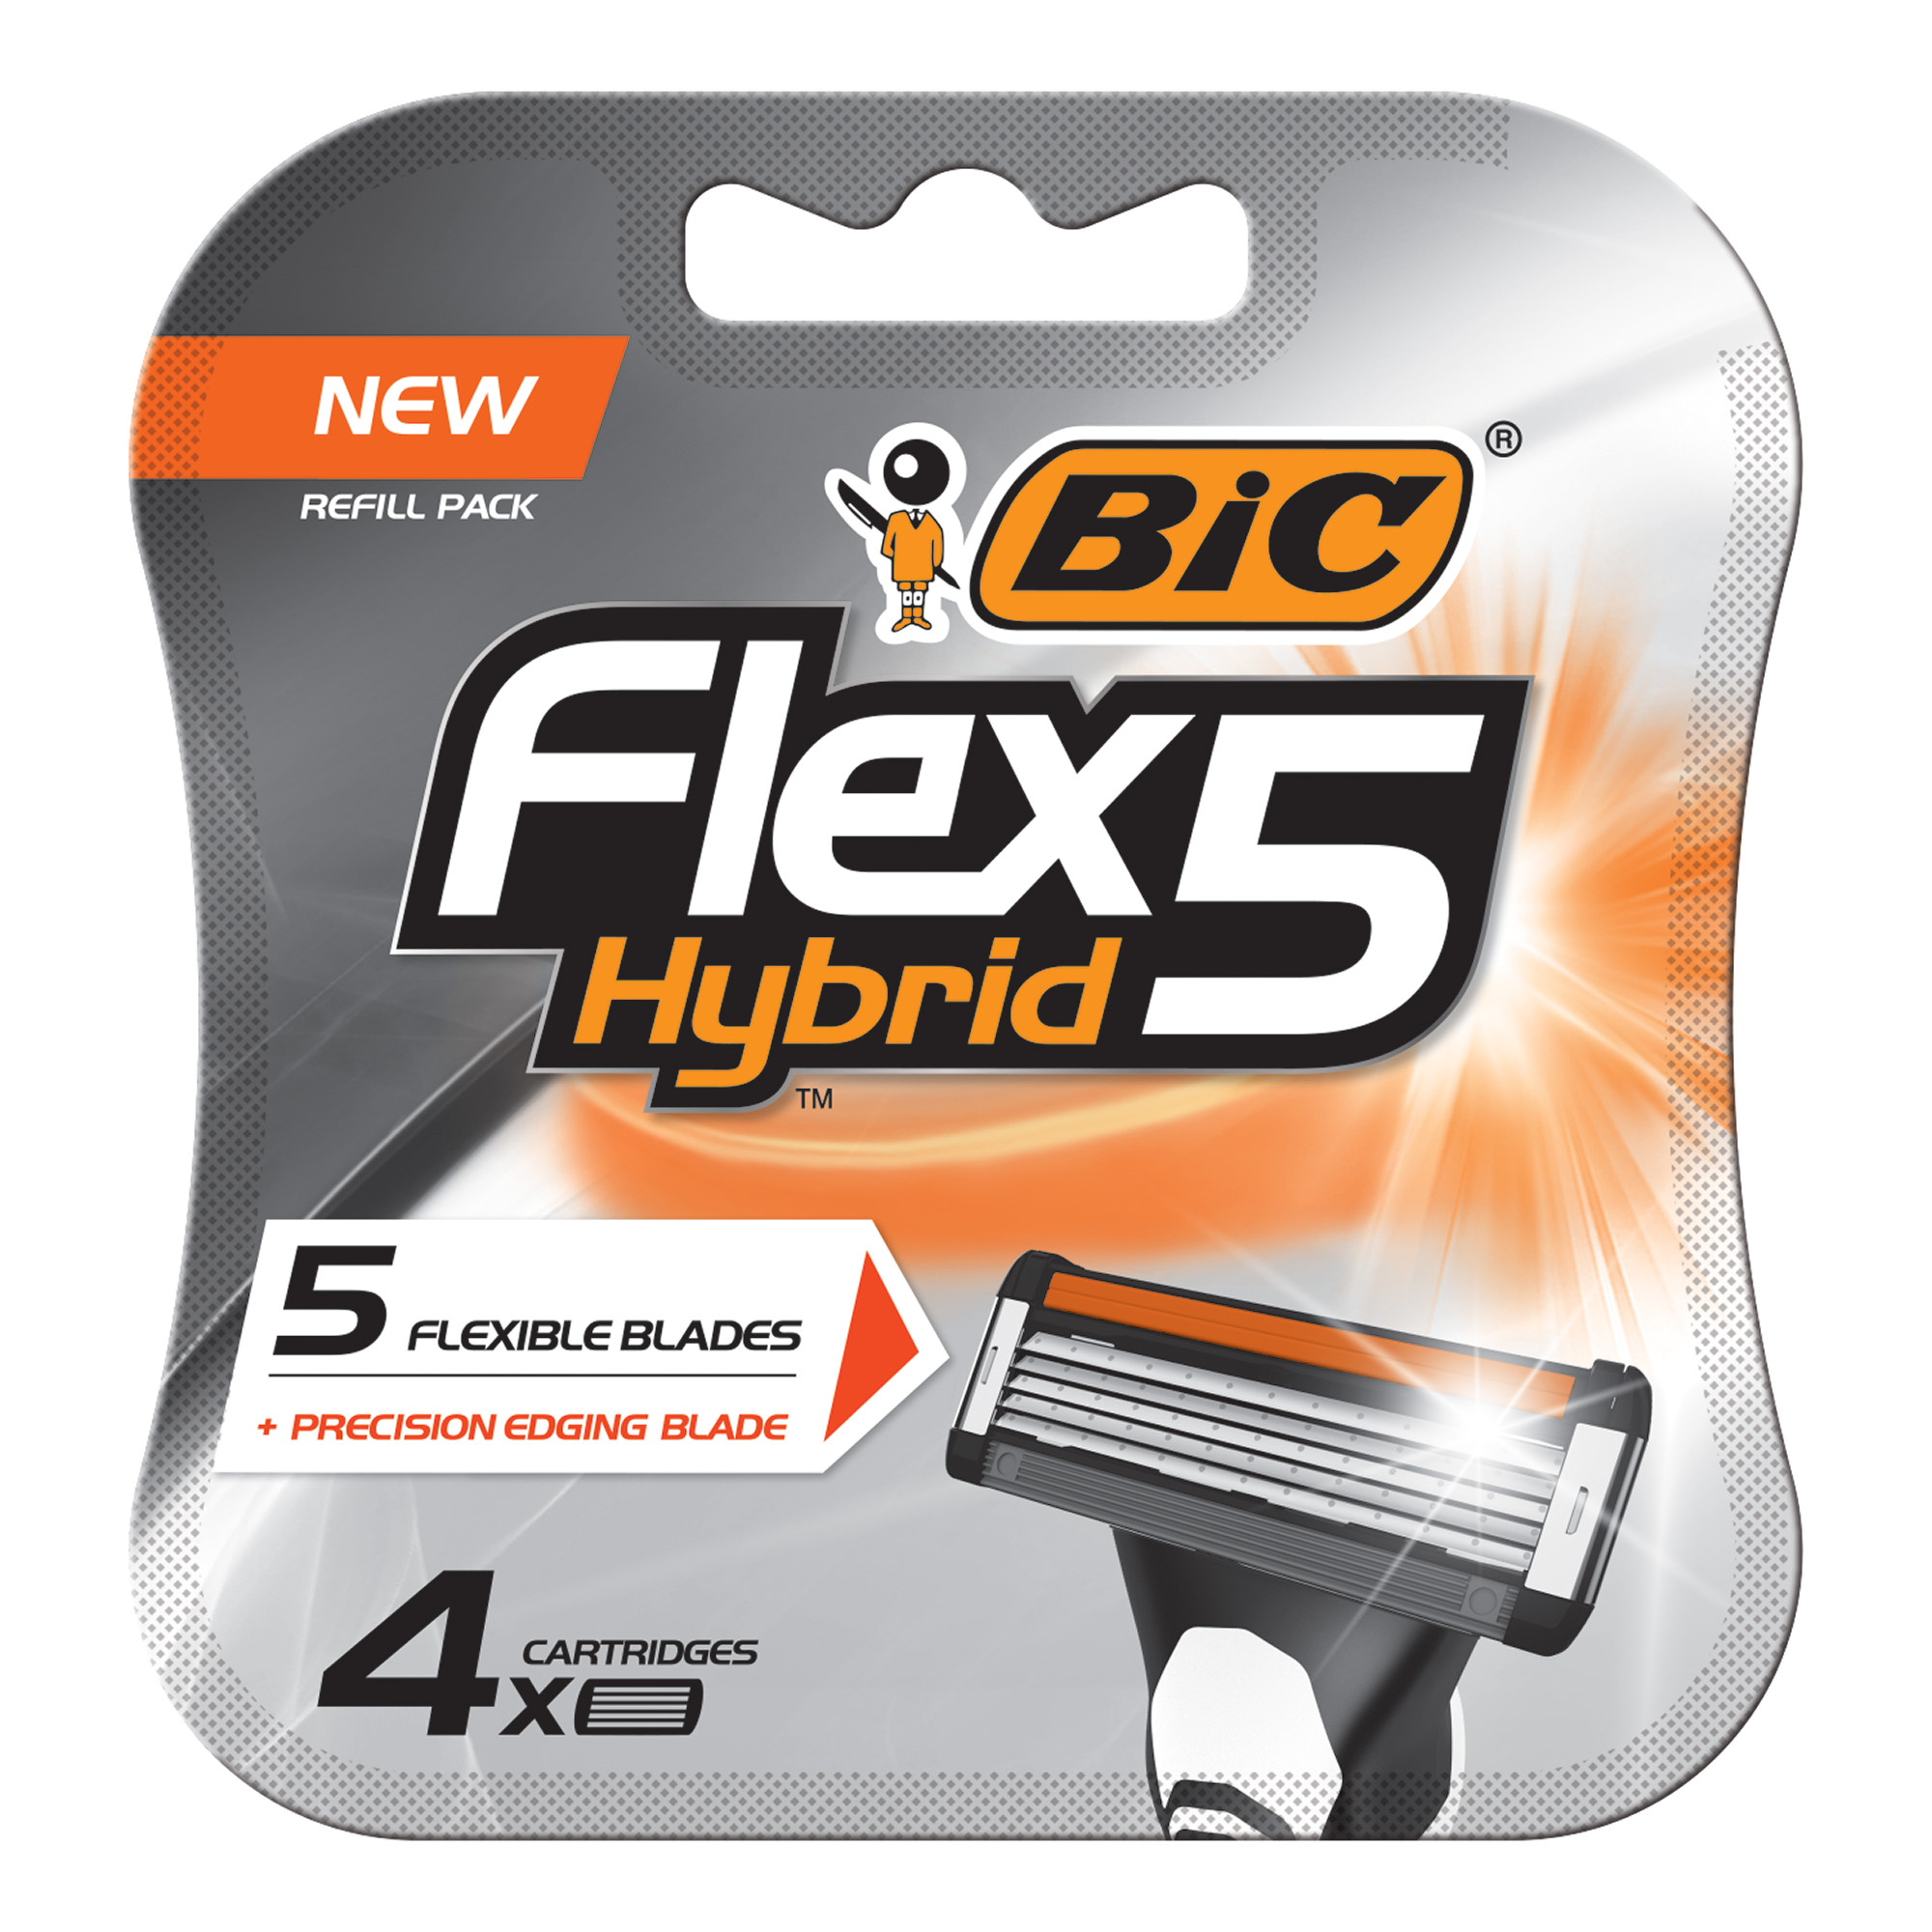 BIC Flex 5 Hybrid Men S 5 Blade Disposable Razor Cartridges for a Smooth Shave  Includes 4 Cartridges Shaving Supplies